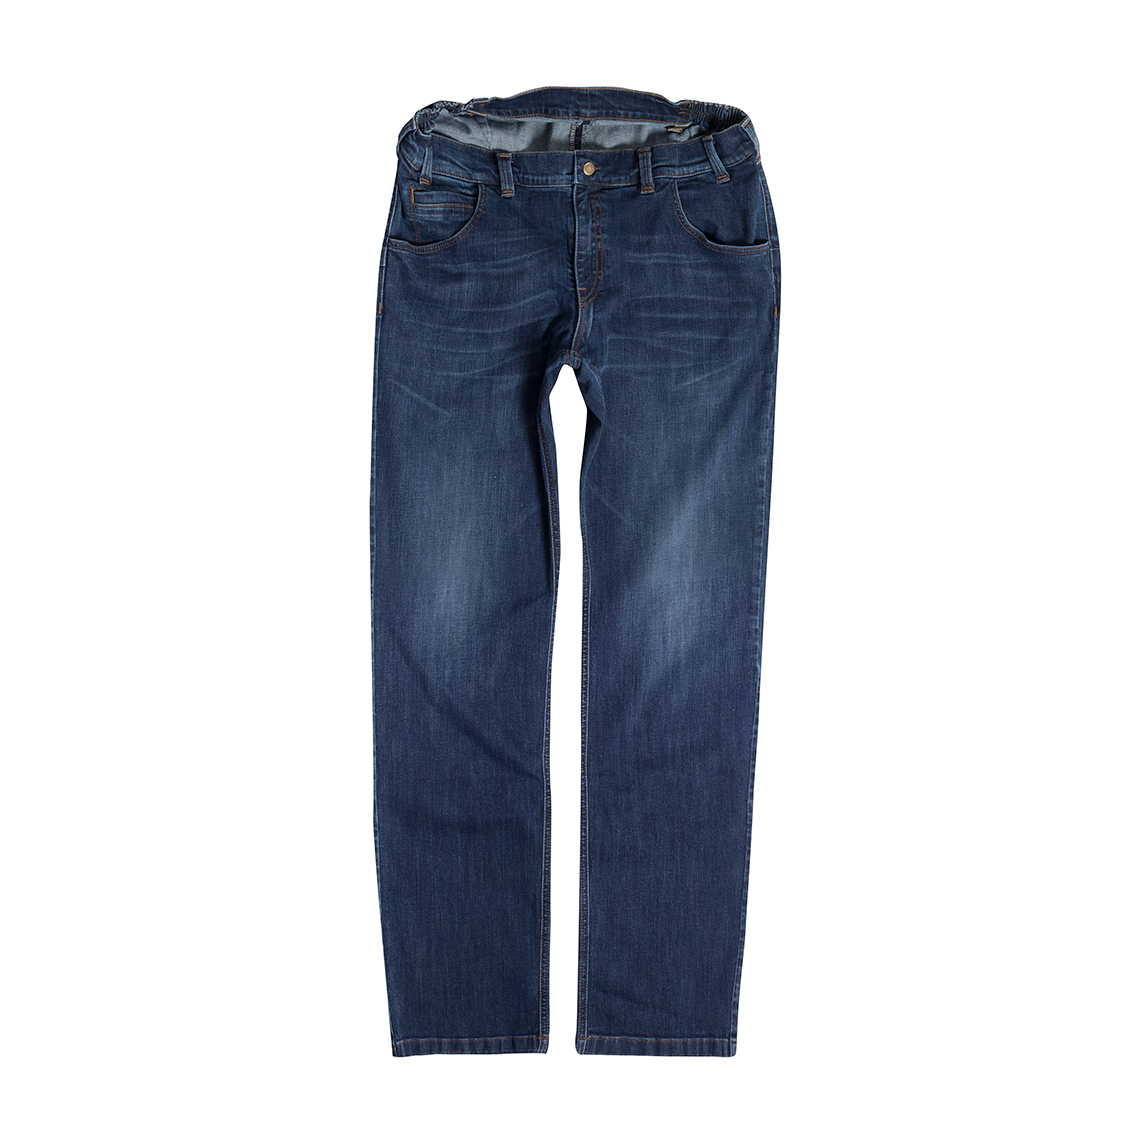 Herren Jeans  Fashion washed, blau MIKE 10391 54